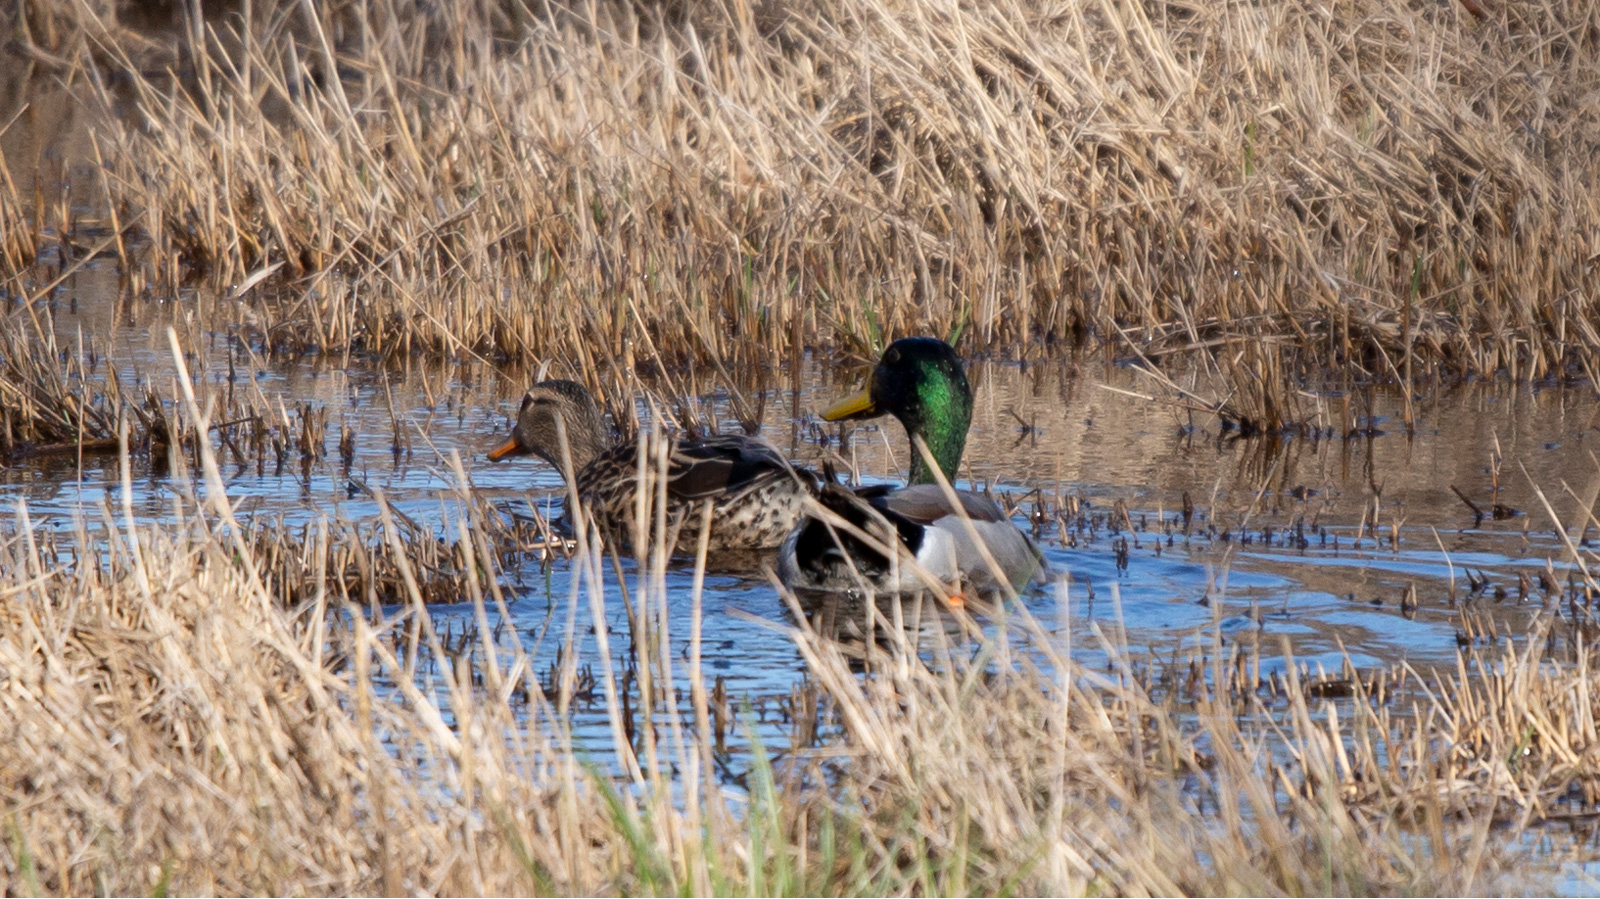 Mallard duck pair swimming through water reeds.